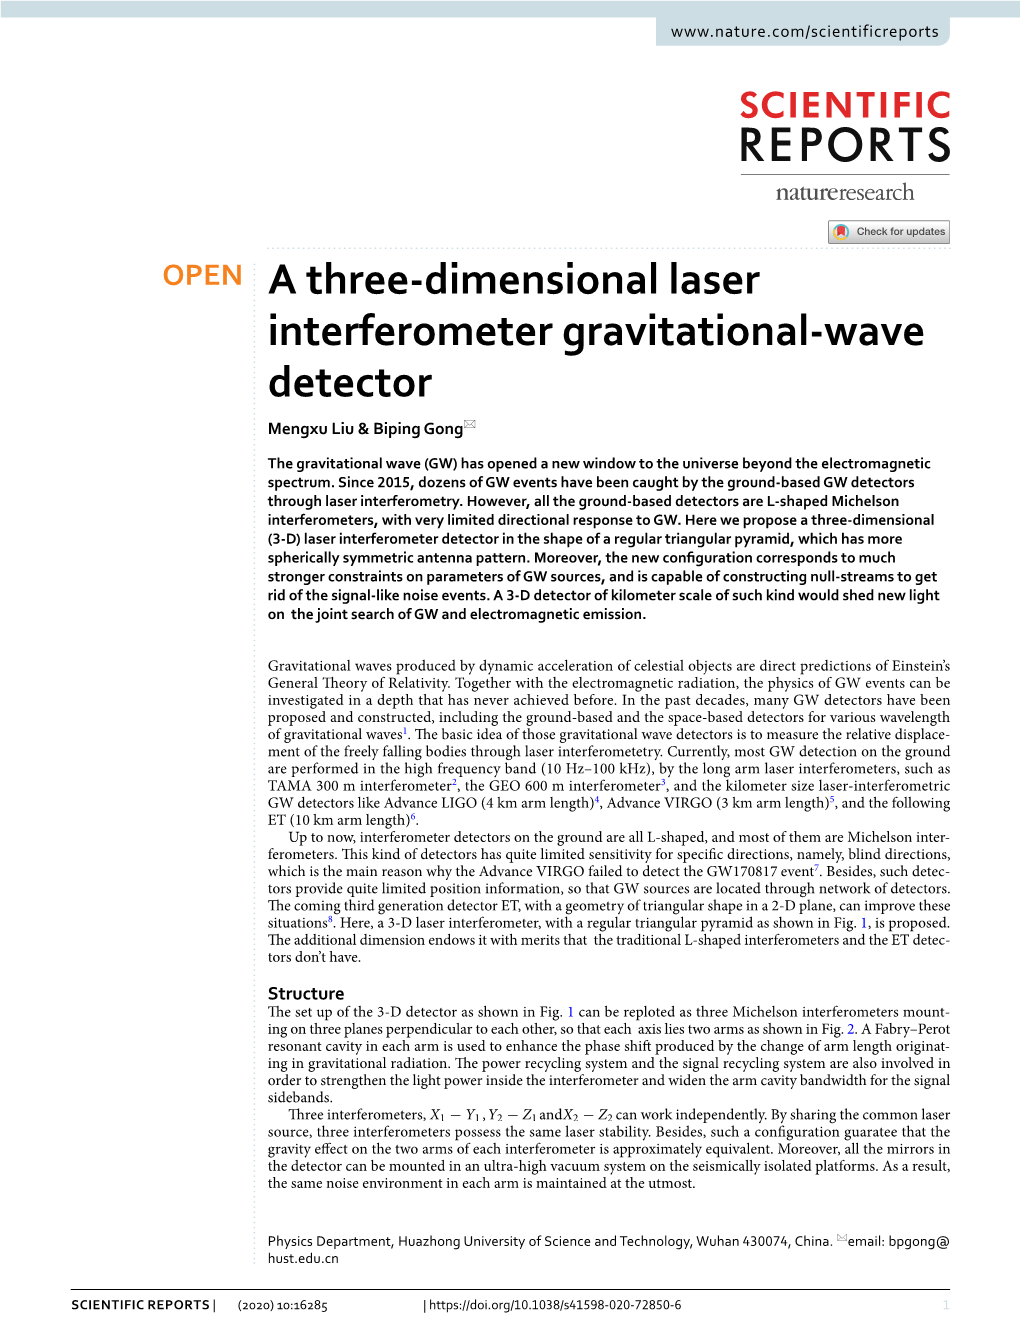 A Three-Dimensional Laser Interferometer Gravitational-Wave Detector